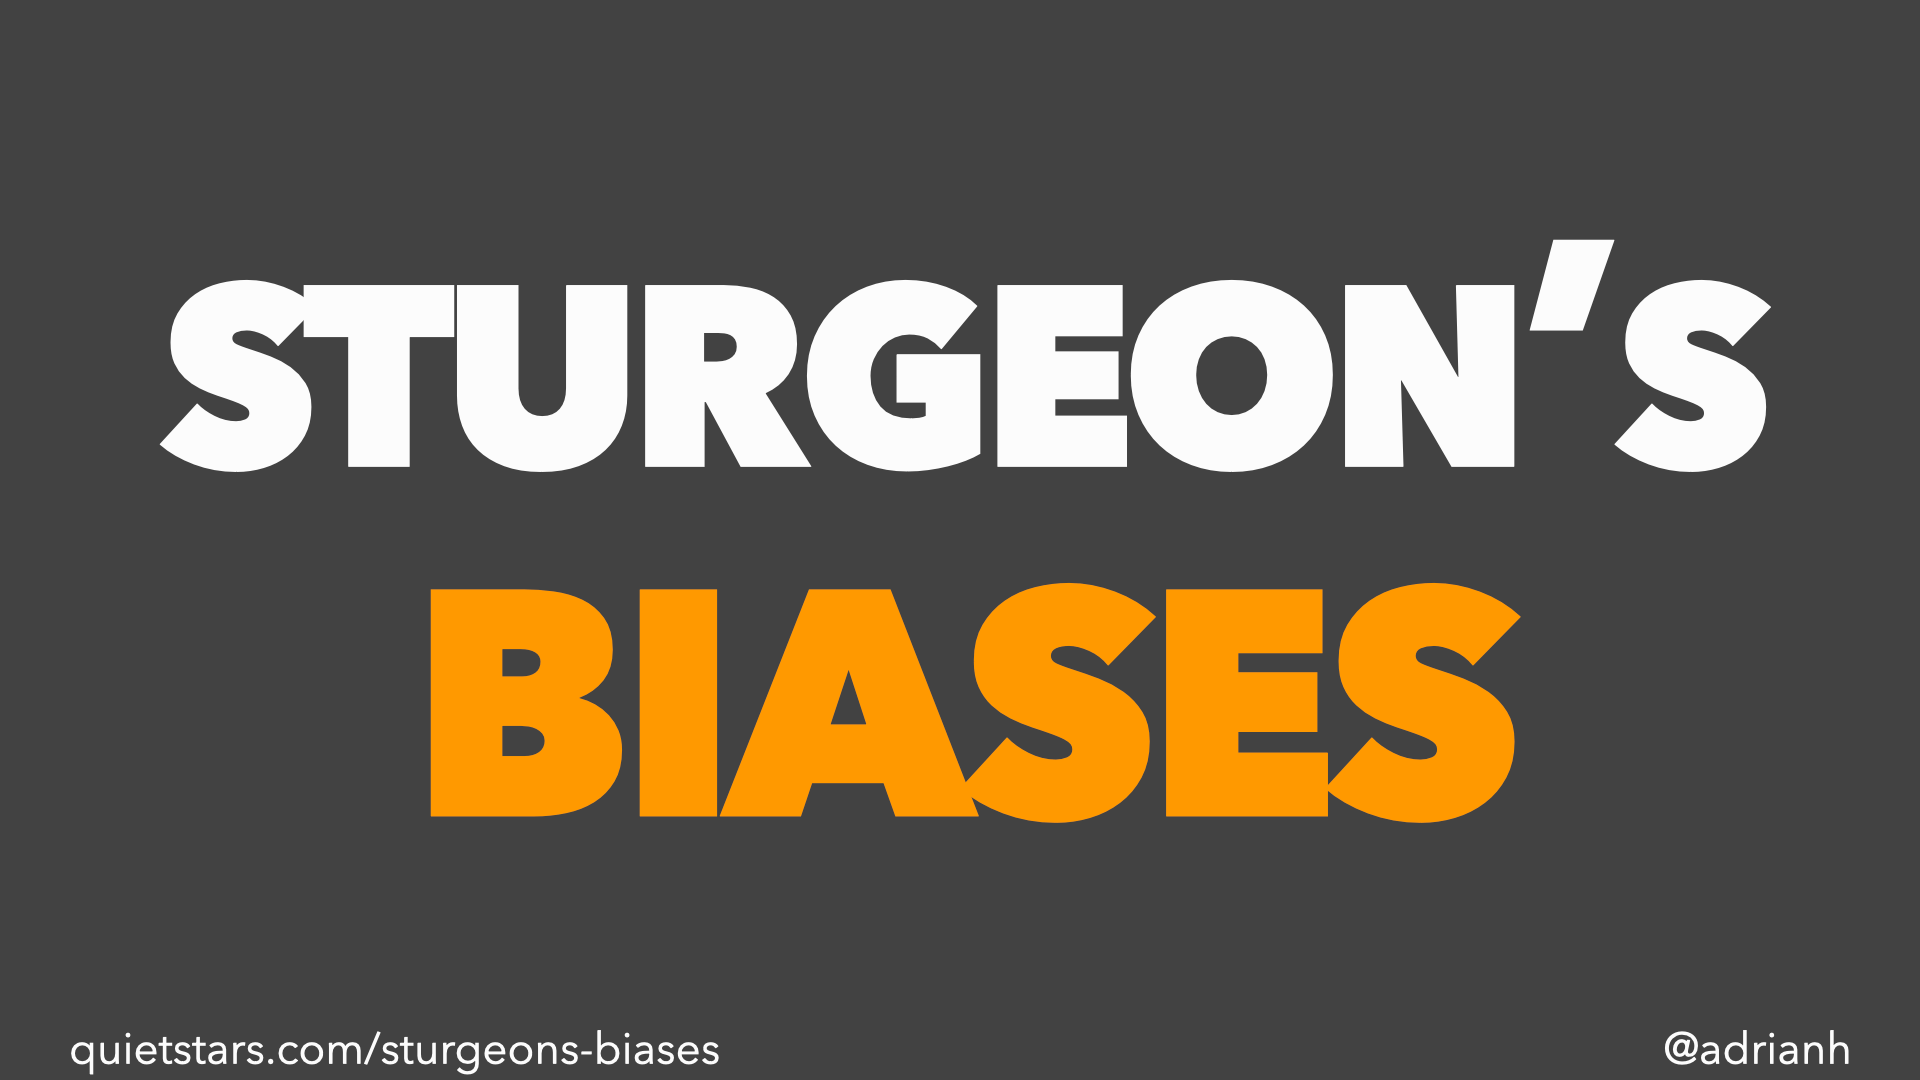 Sturgeon's Biases